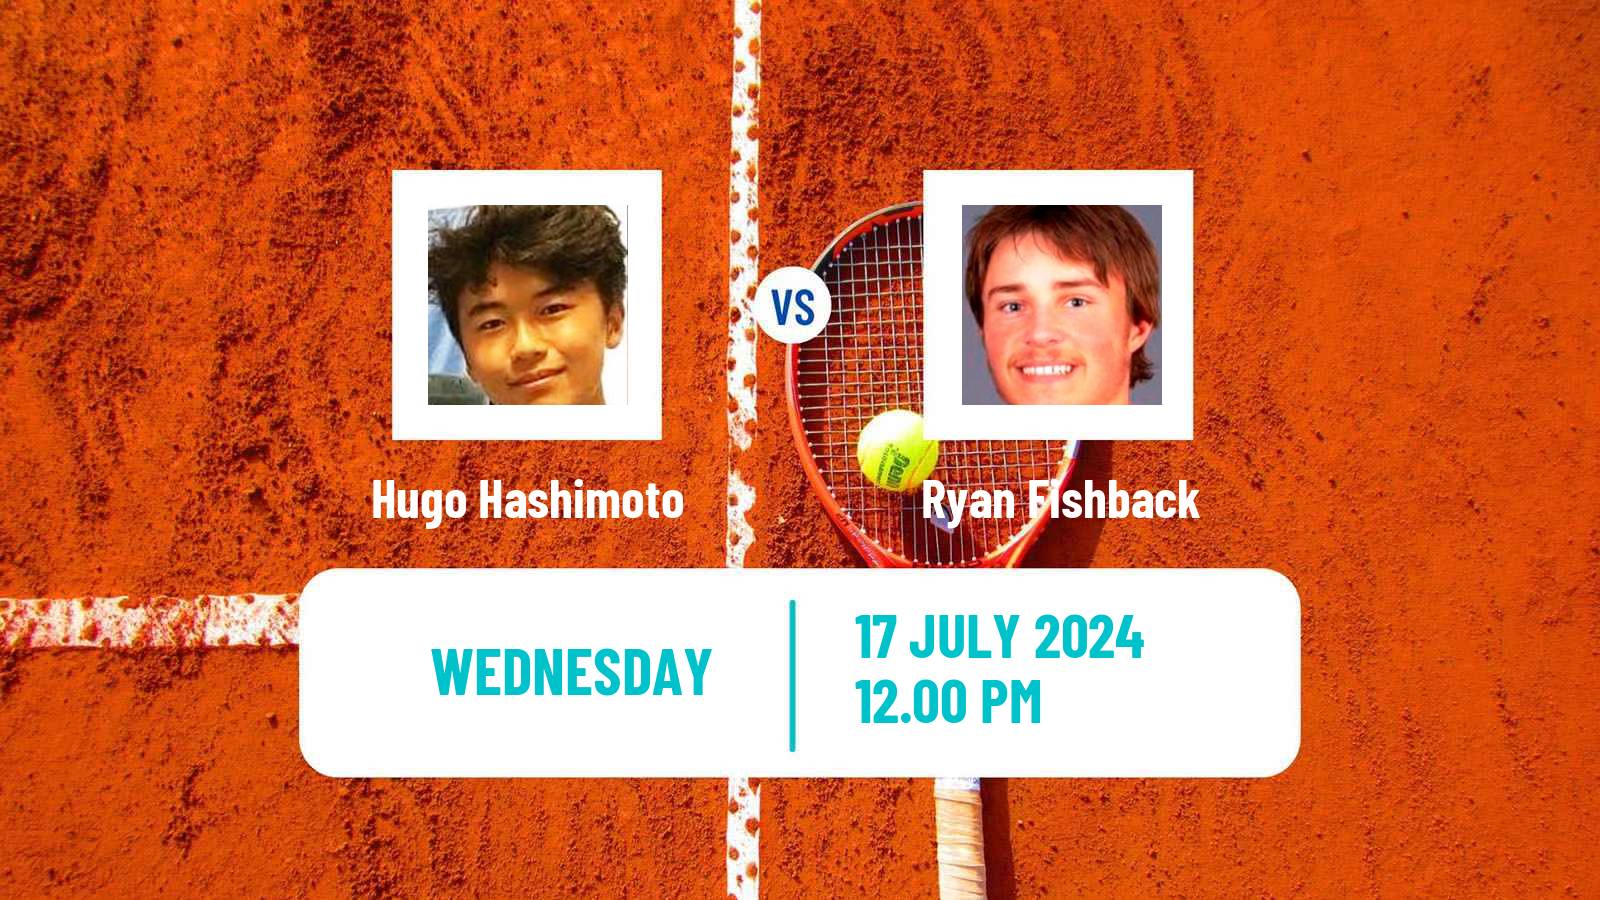 Tennis ITF M15 Rochester Ny Men Hugo Hashimoto - Ryan Fishback